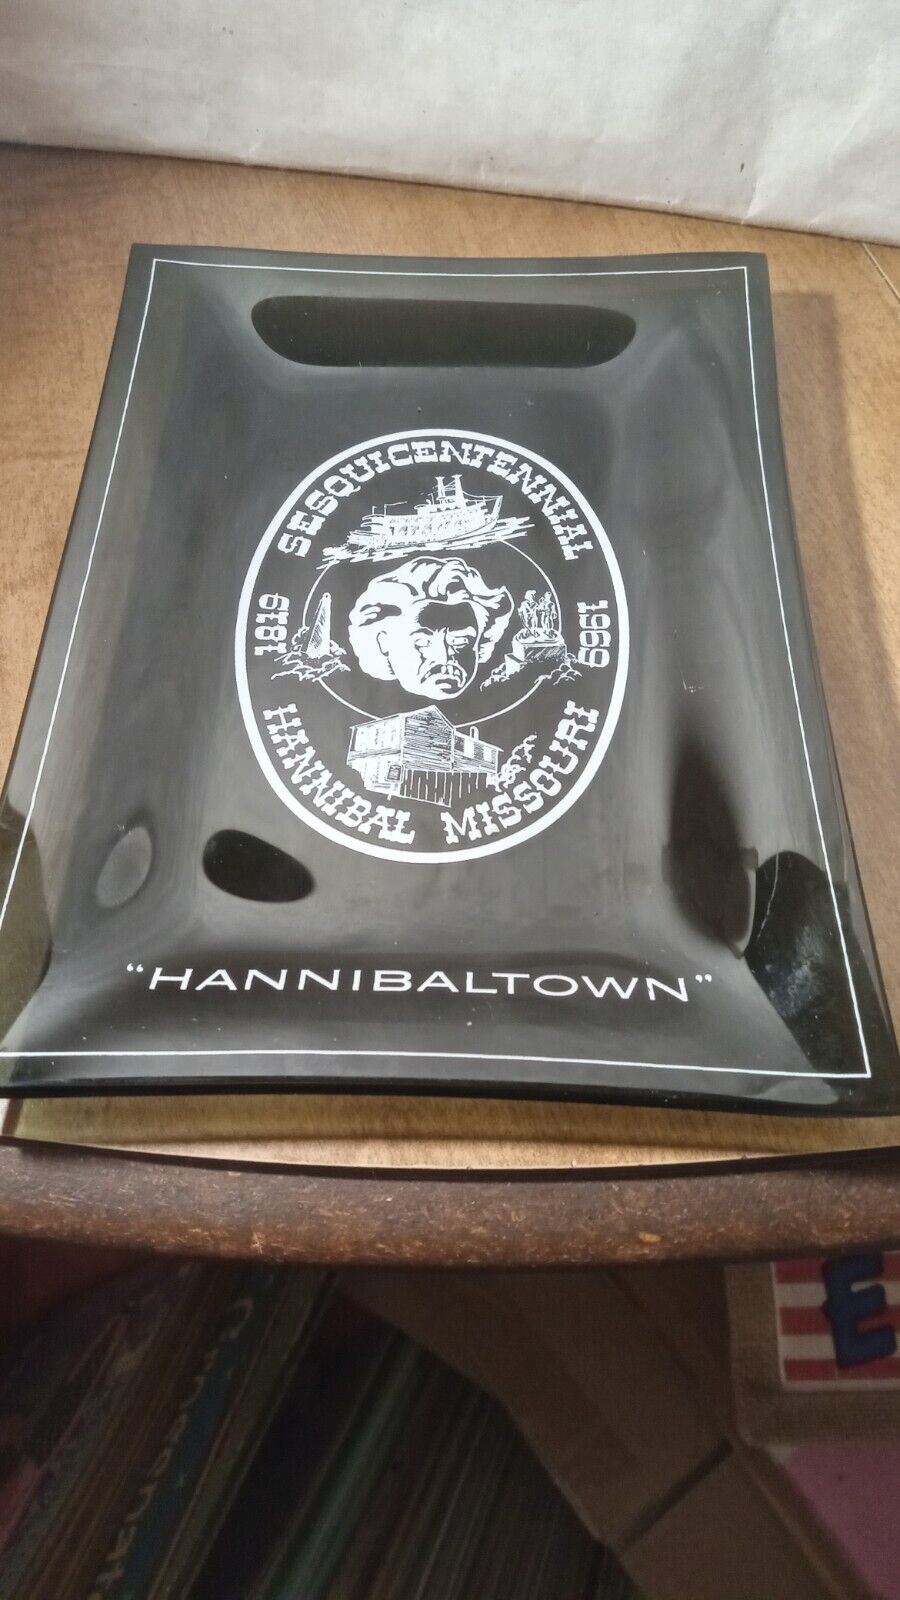 1969 Hannibal Missouri Sesquicentennial Hannibaltown Trinket Dish Ashtray